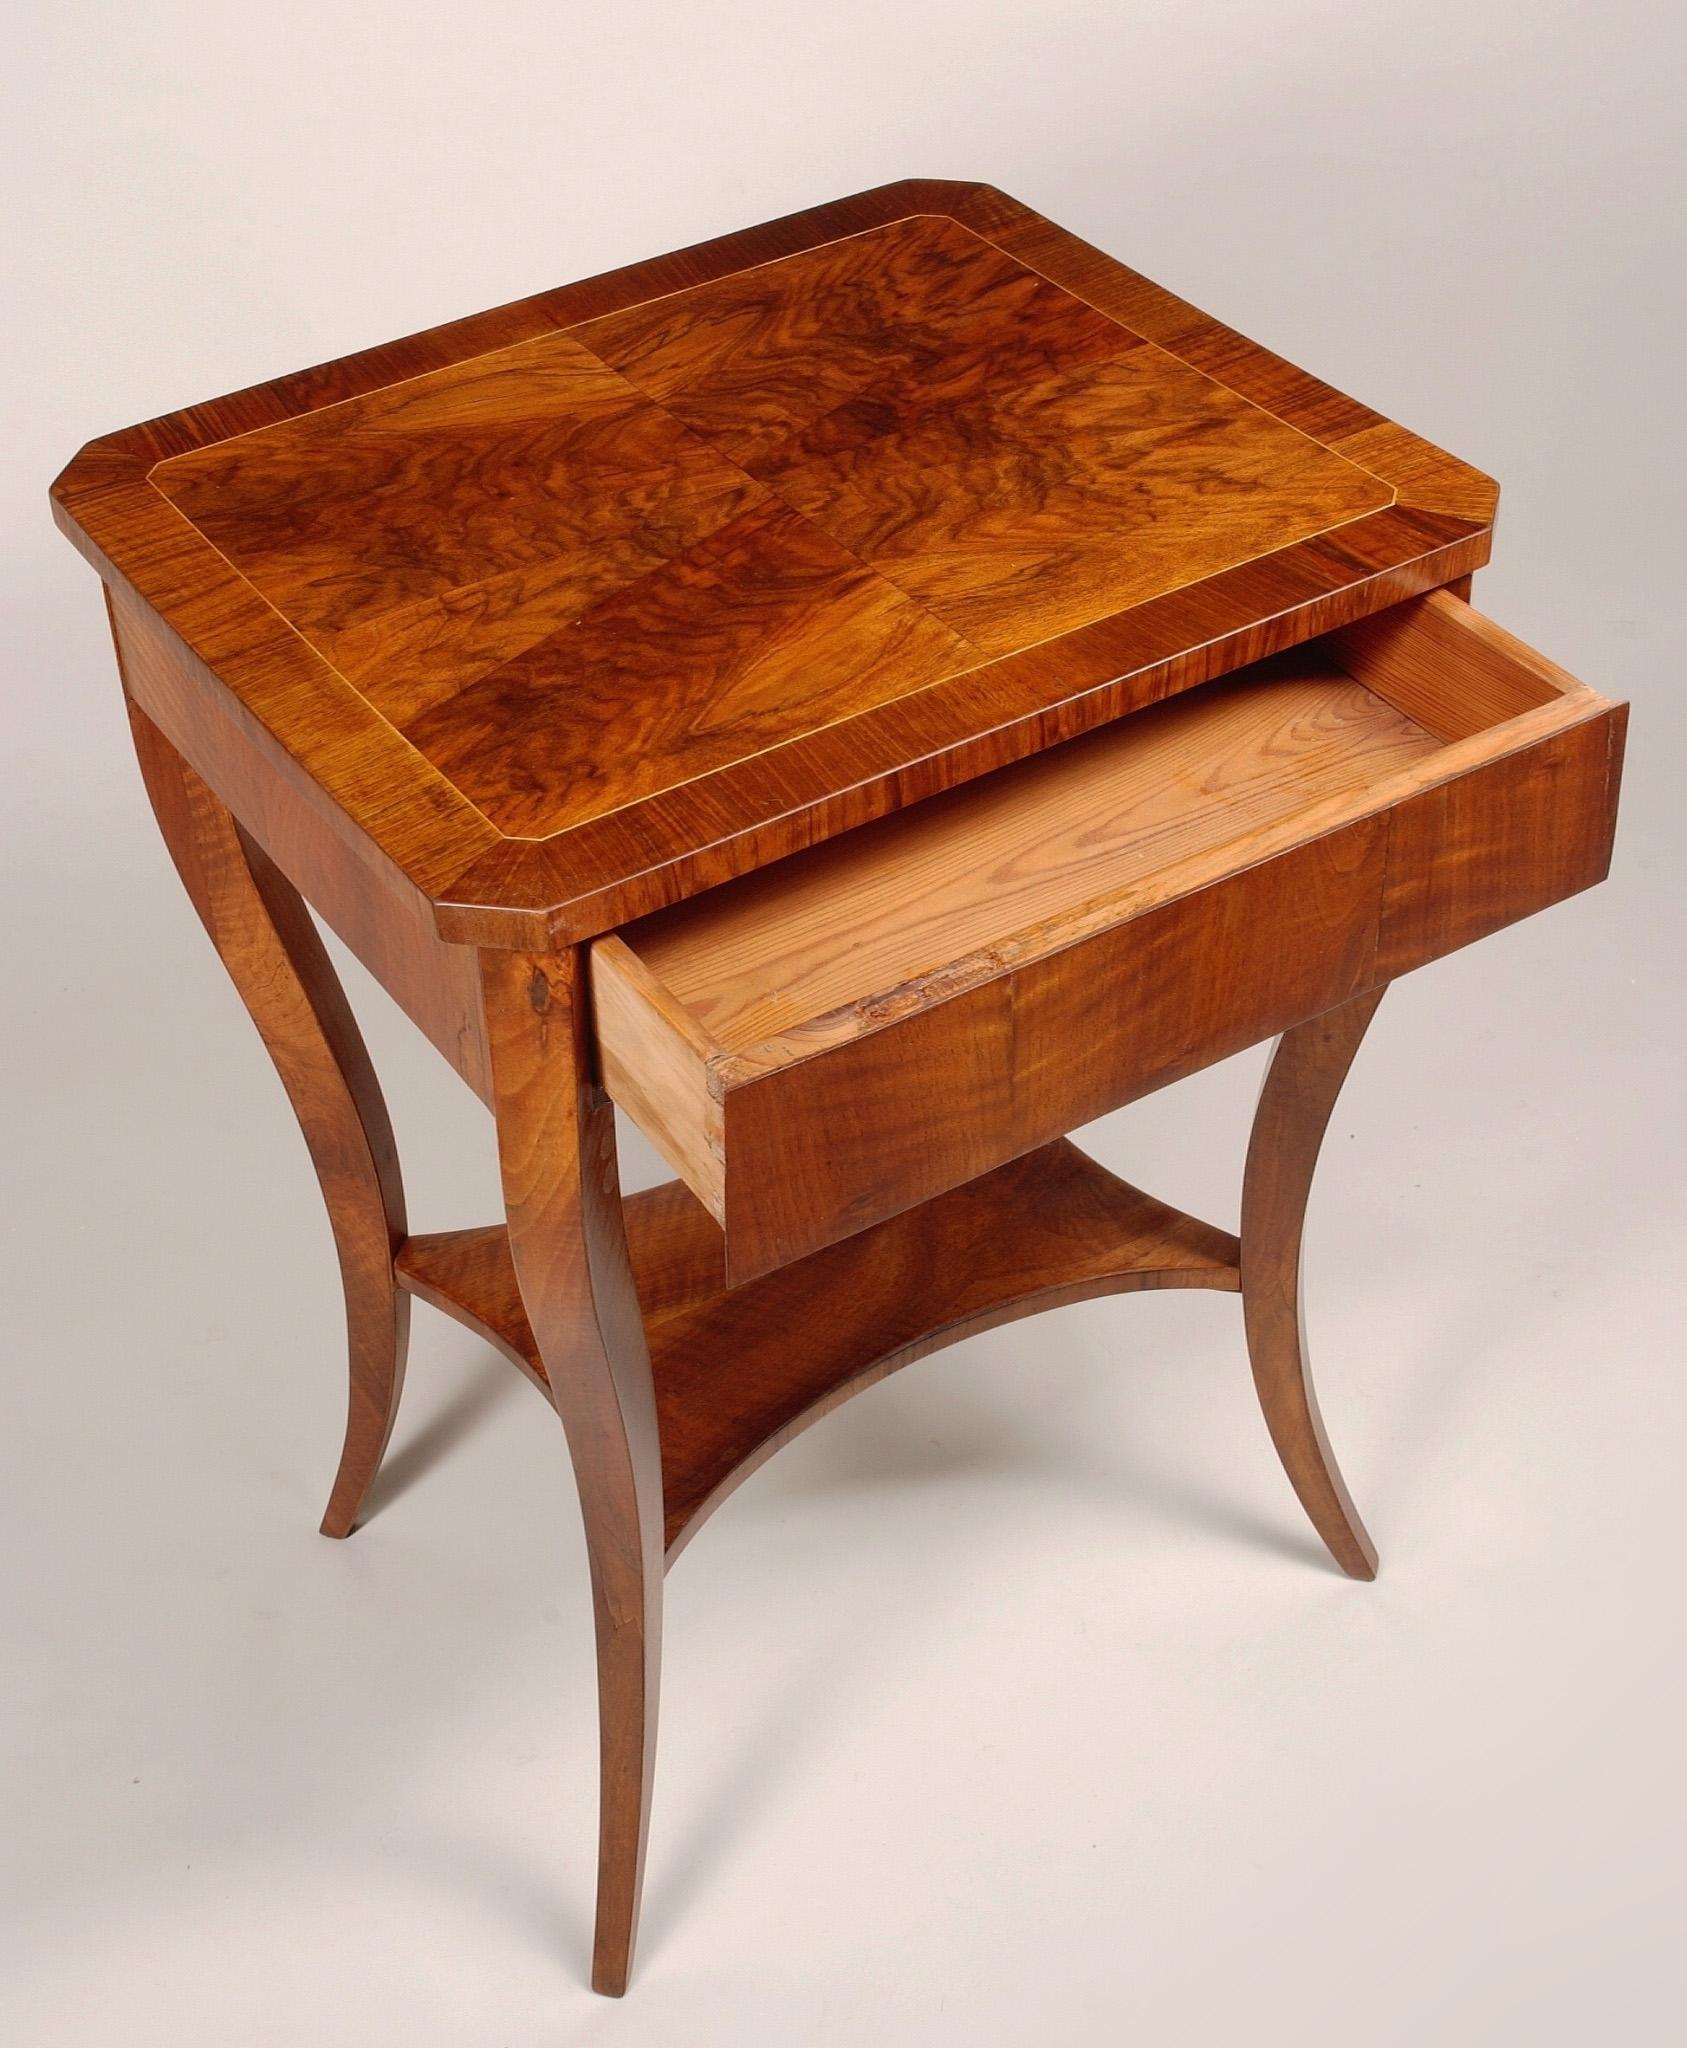 Biedermeier small table.
Period: 1830-1839
Material: Walnut
Source: Austria (Vienna)
Shellac polished.